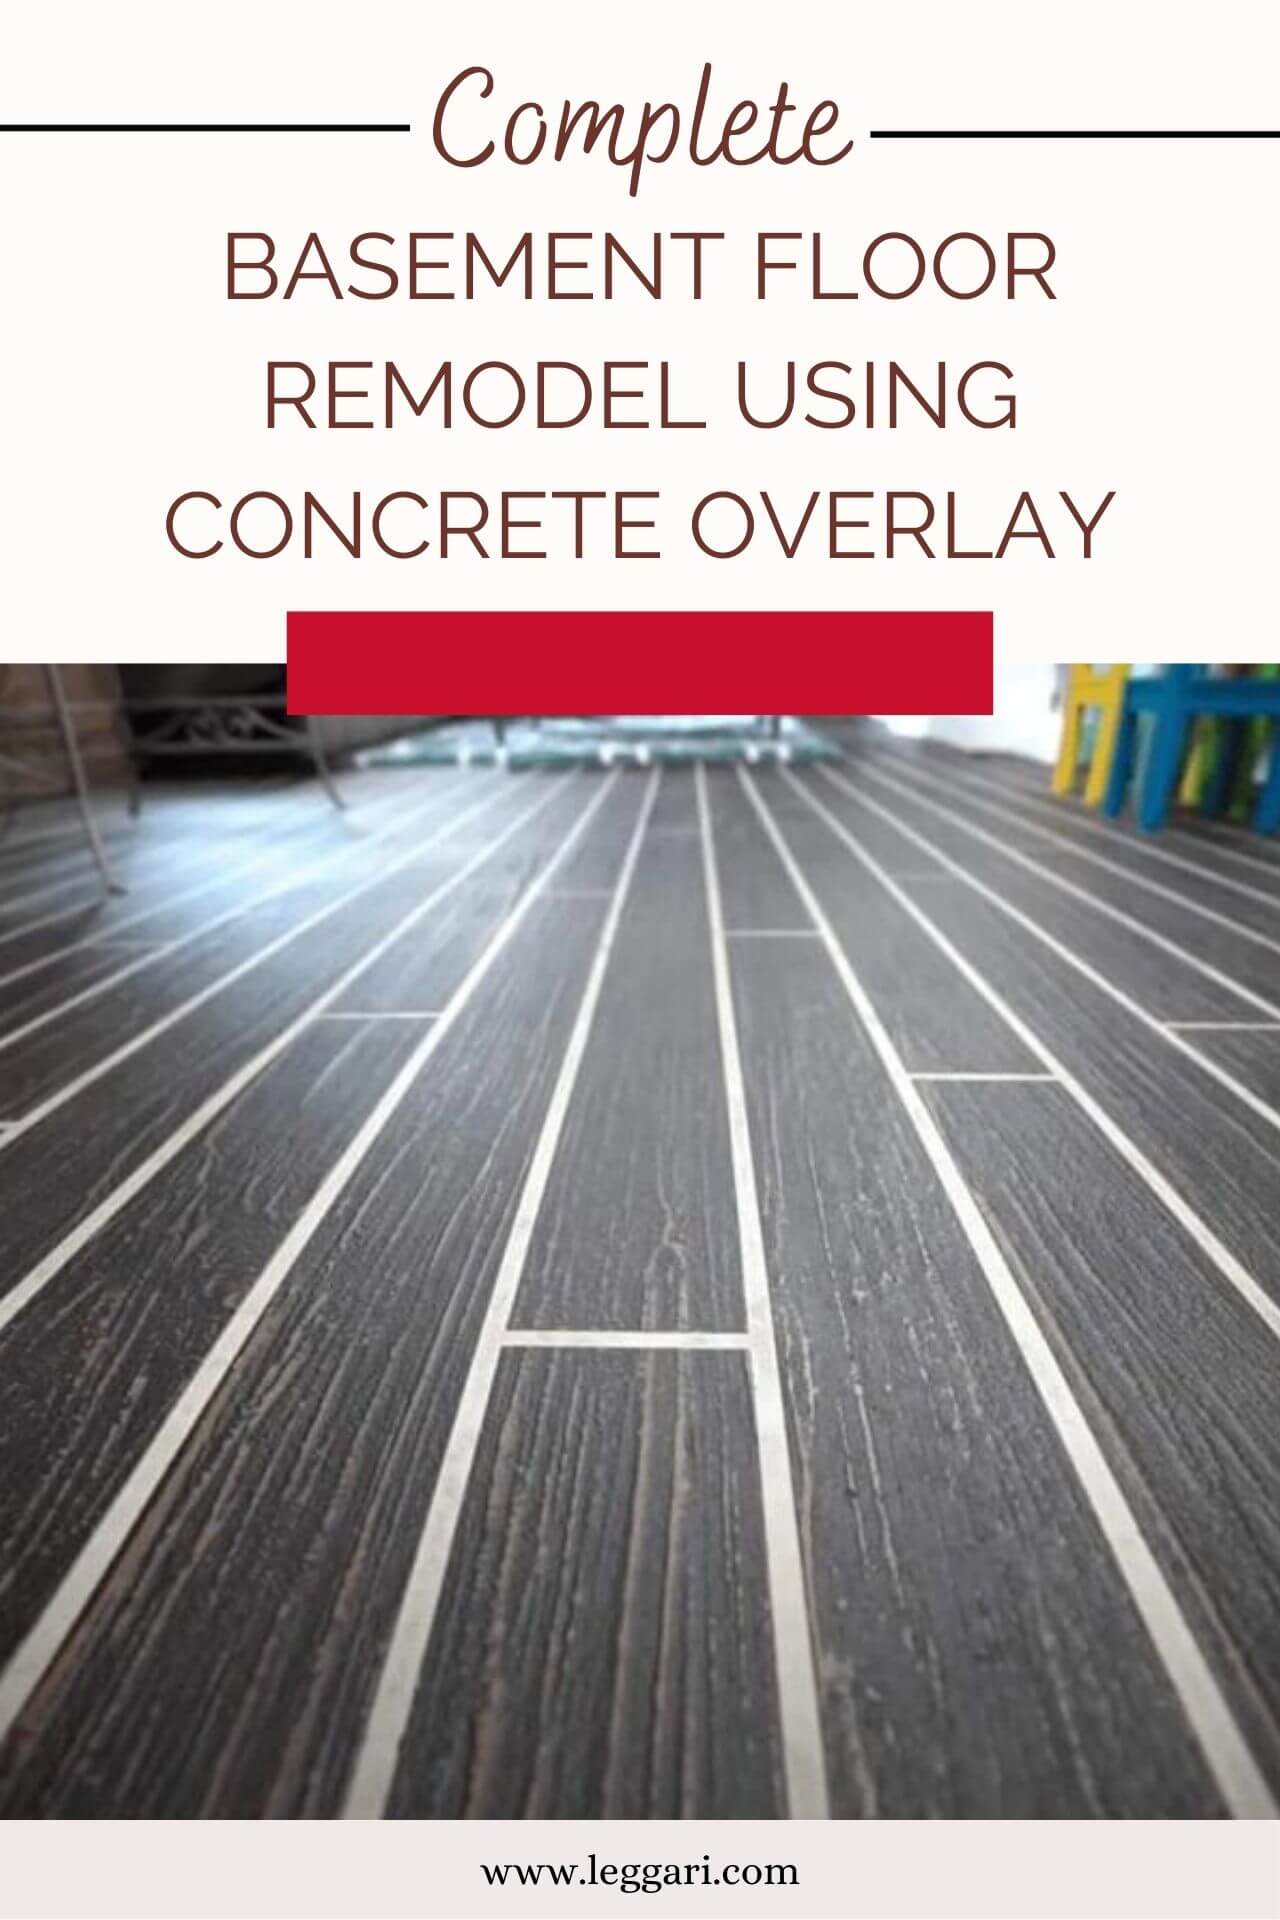 Complete Basement Floor Remodel Using Concrete Overlay